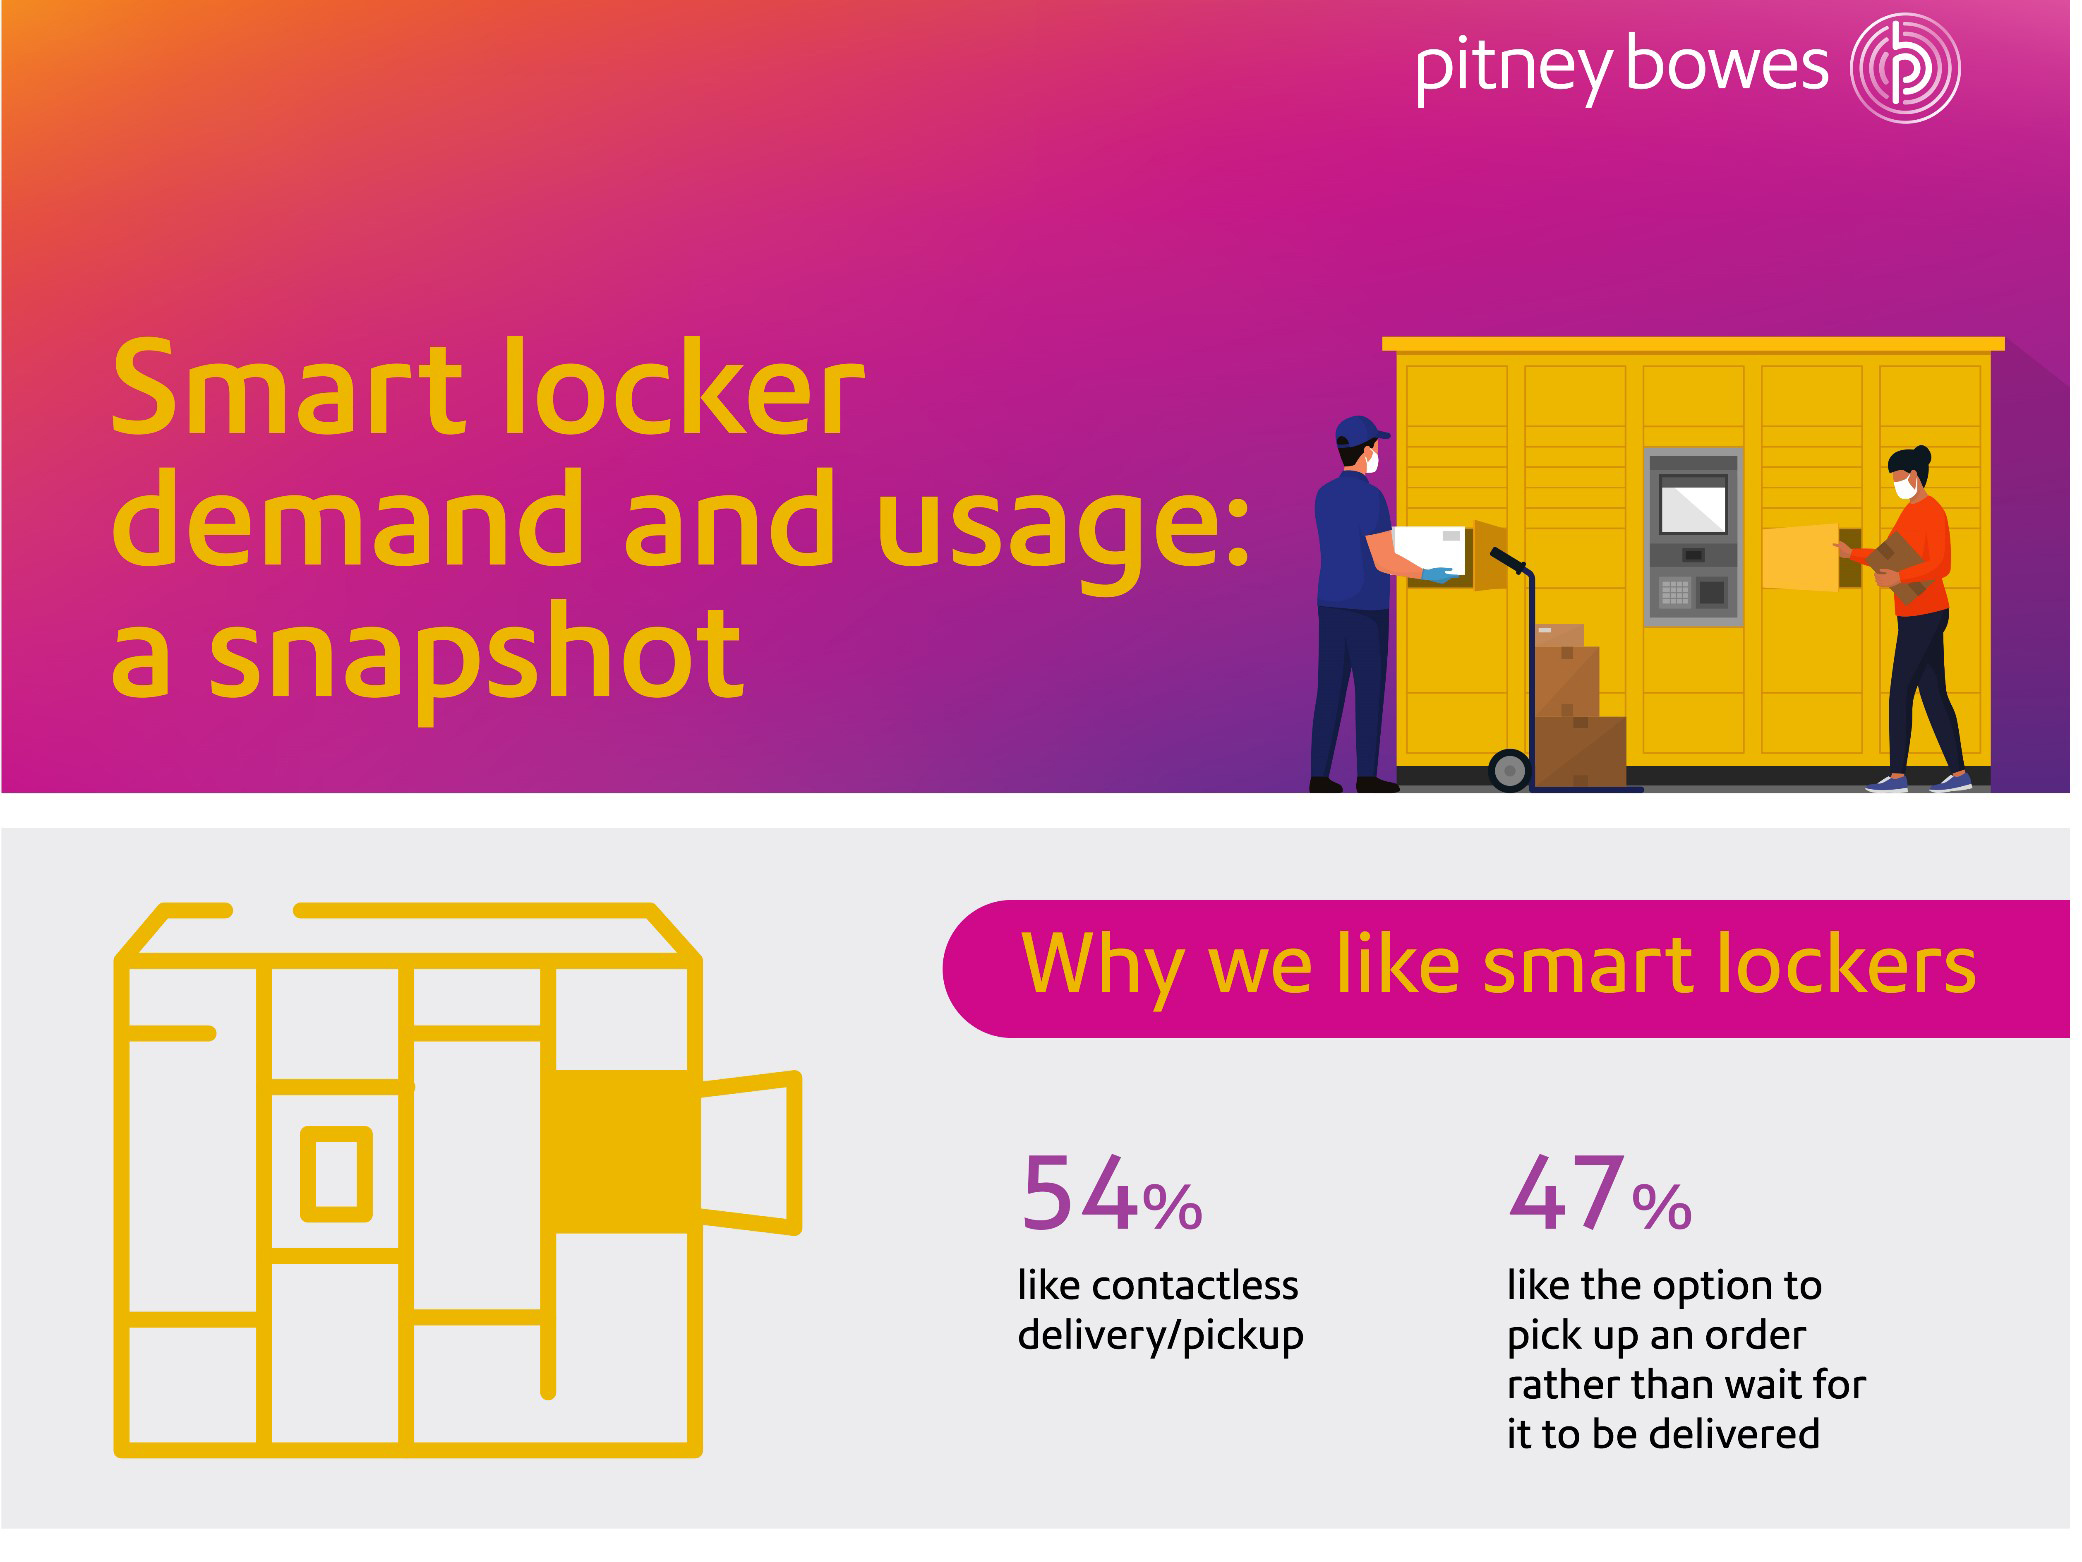 Smart locker demand and usage: a snapshot (Photo: Business Wire)